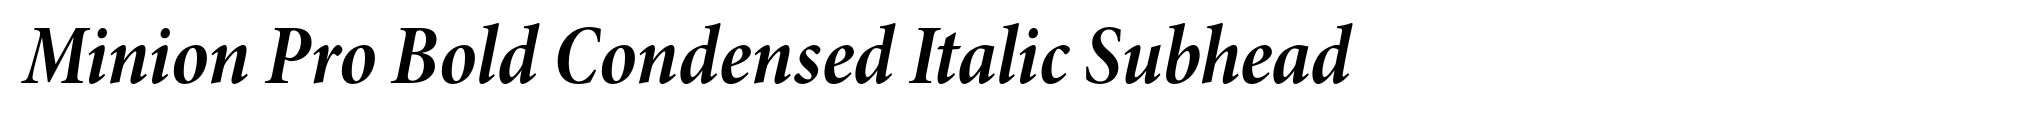 Minion Pro Bold Condensed Italic Subhead image